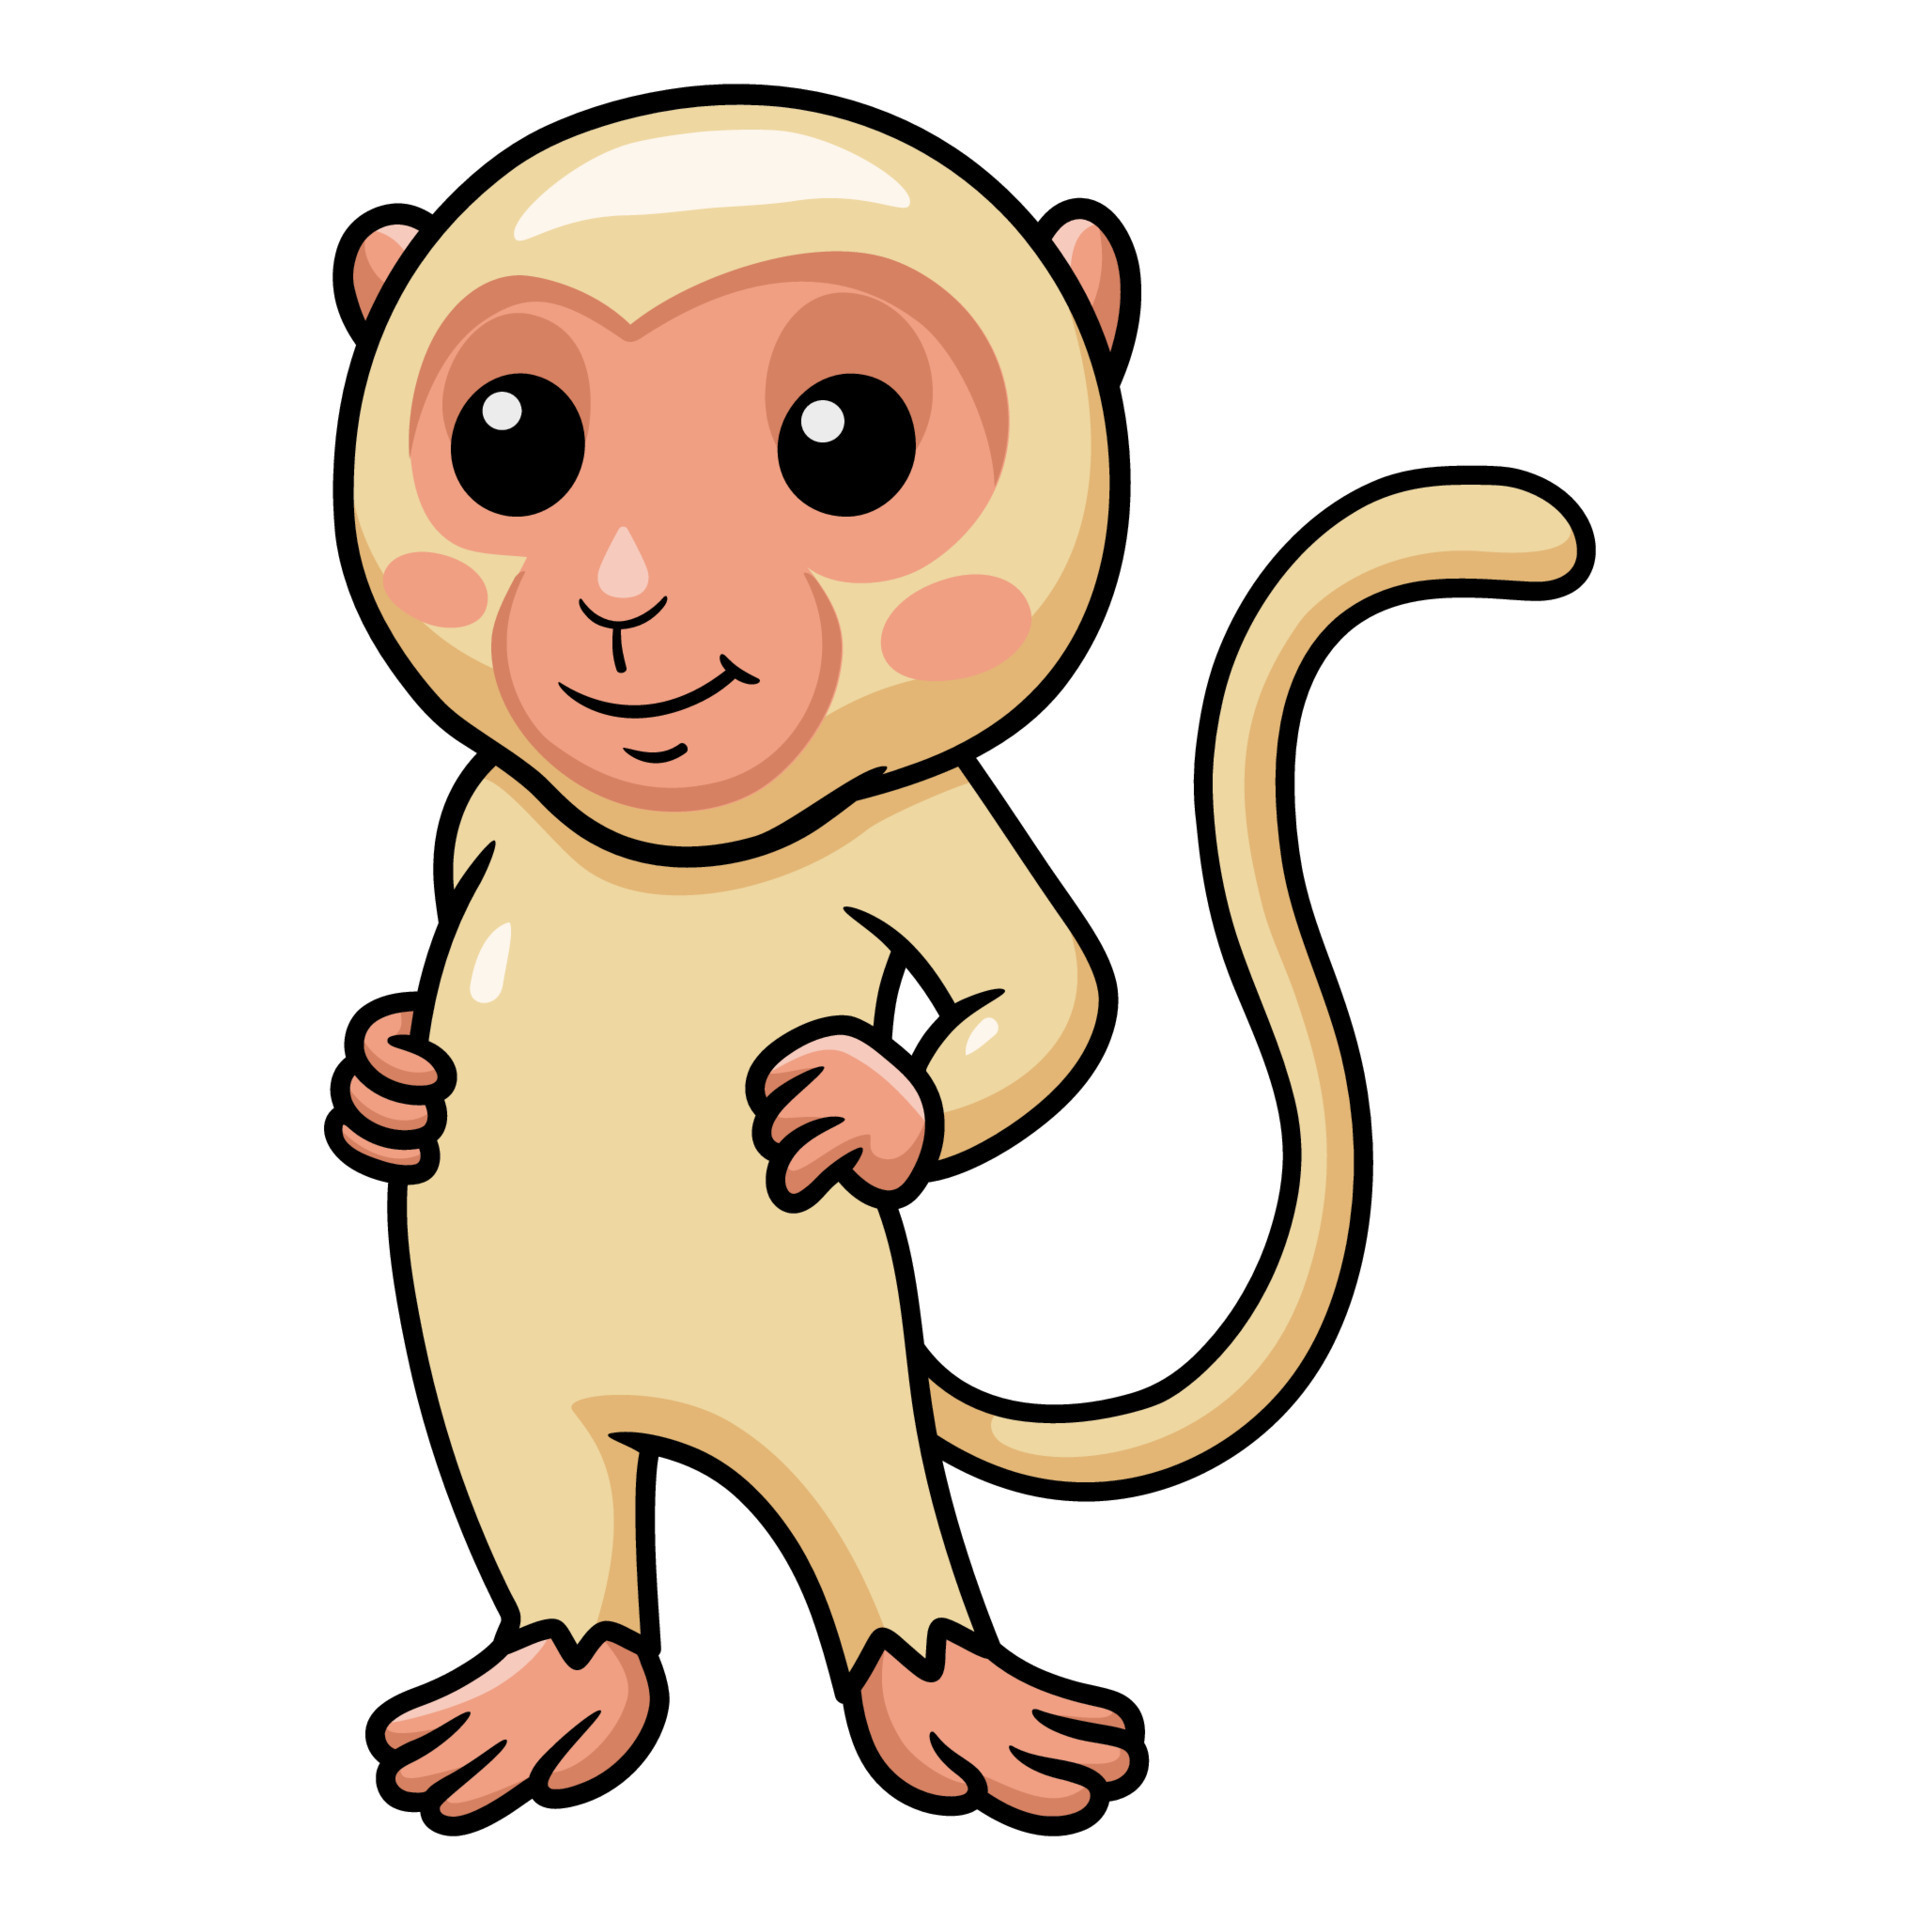 desenho de macaco albino bonitinho correndo 14459882 Vetor no Vecteezy